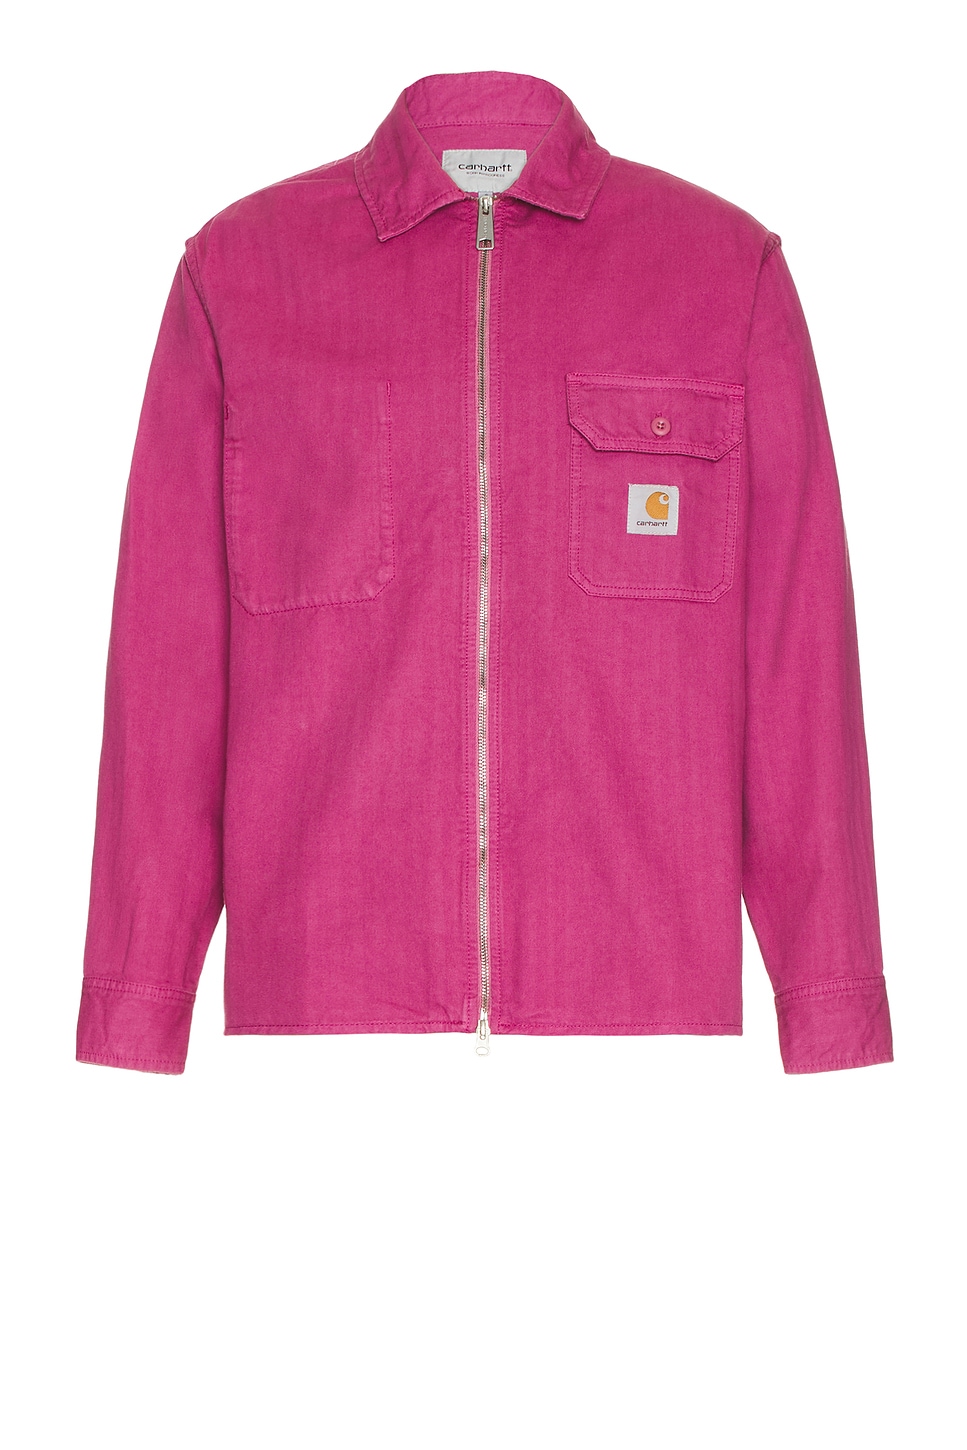 Image 1 of Carhartt WIP Rainer Shirt Jacket in Magenta Garment Dyed